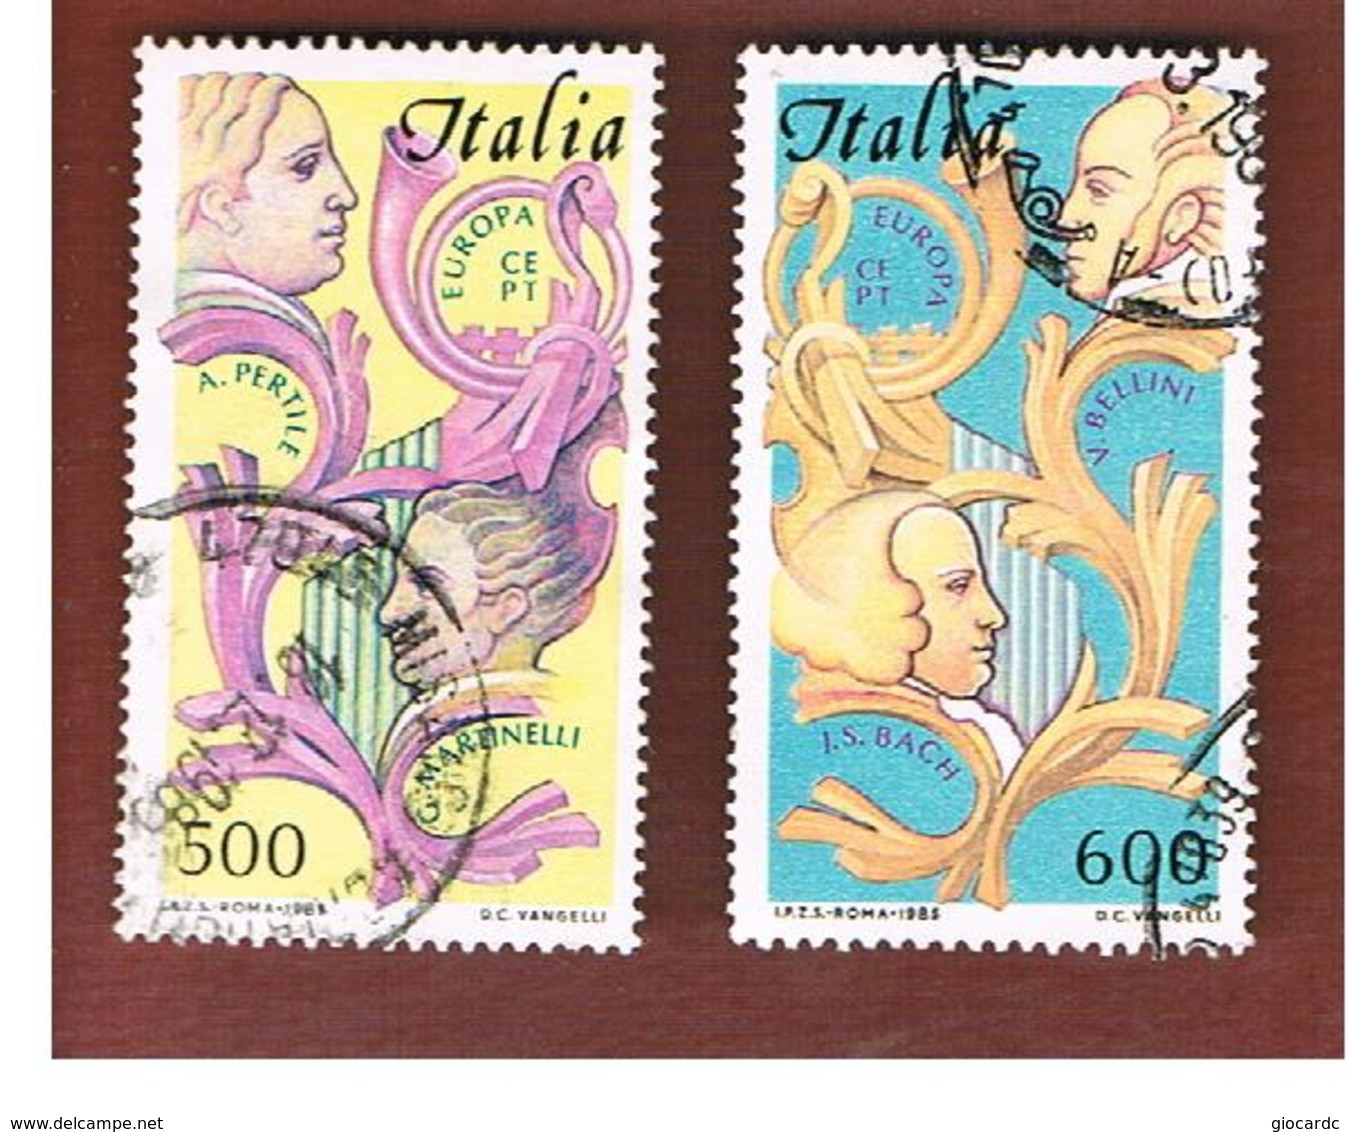 ITALIA REPUBBLICA  - UNIF. 1735.1736    -      1985  EUROPA: MUSIC  (COMPLET SET OF 2)   -      USATO  - RIF. 30860.61 - 1981-90: Used